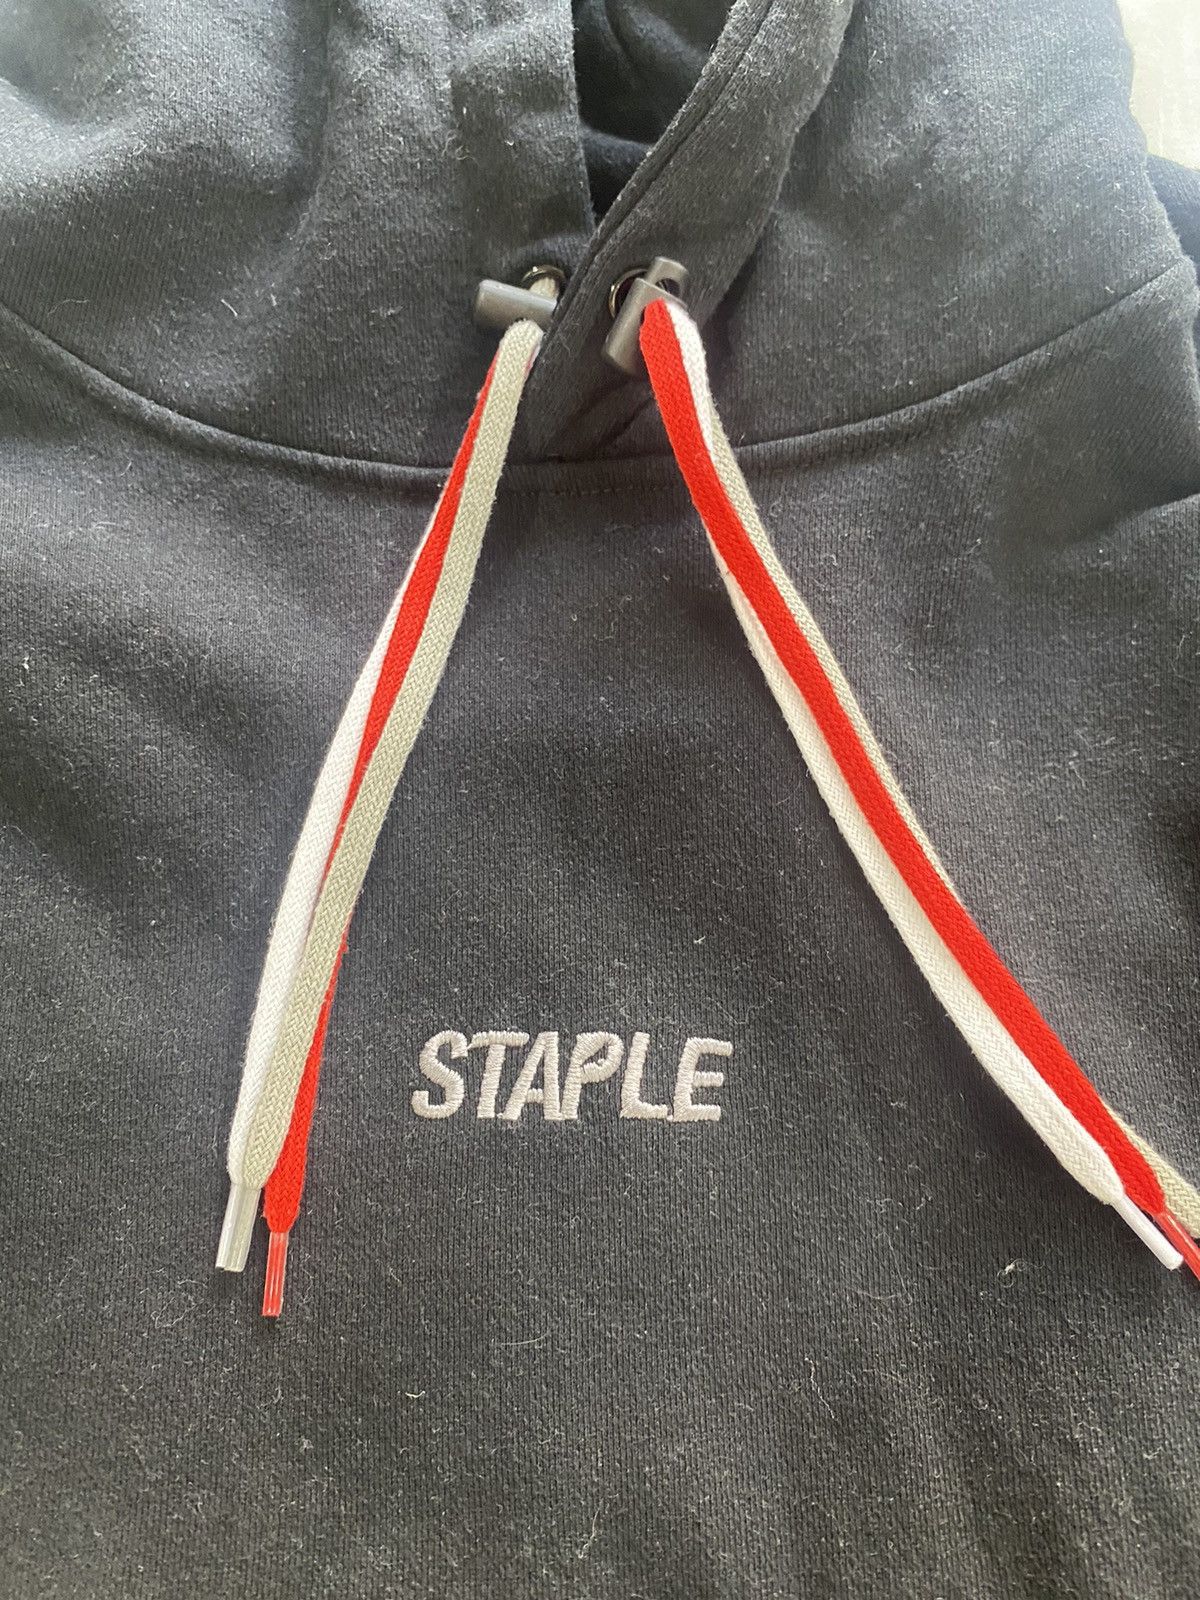 Staple Staple Lace Hoodie Size US XL / EU 56 / 4 - 2 Preview